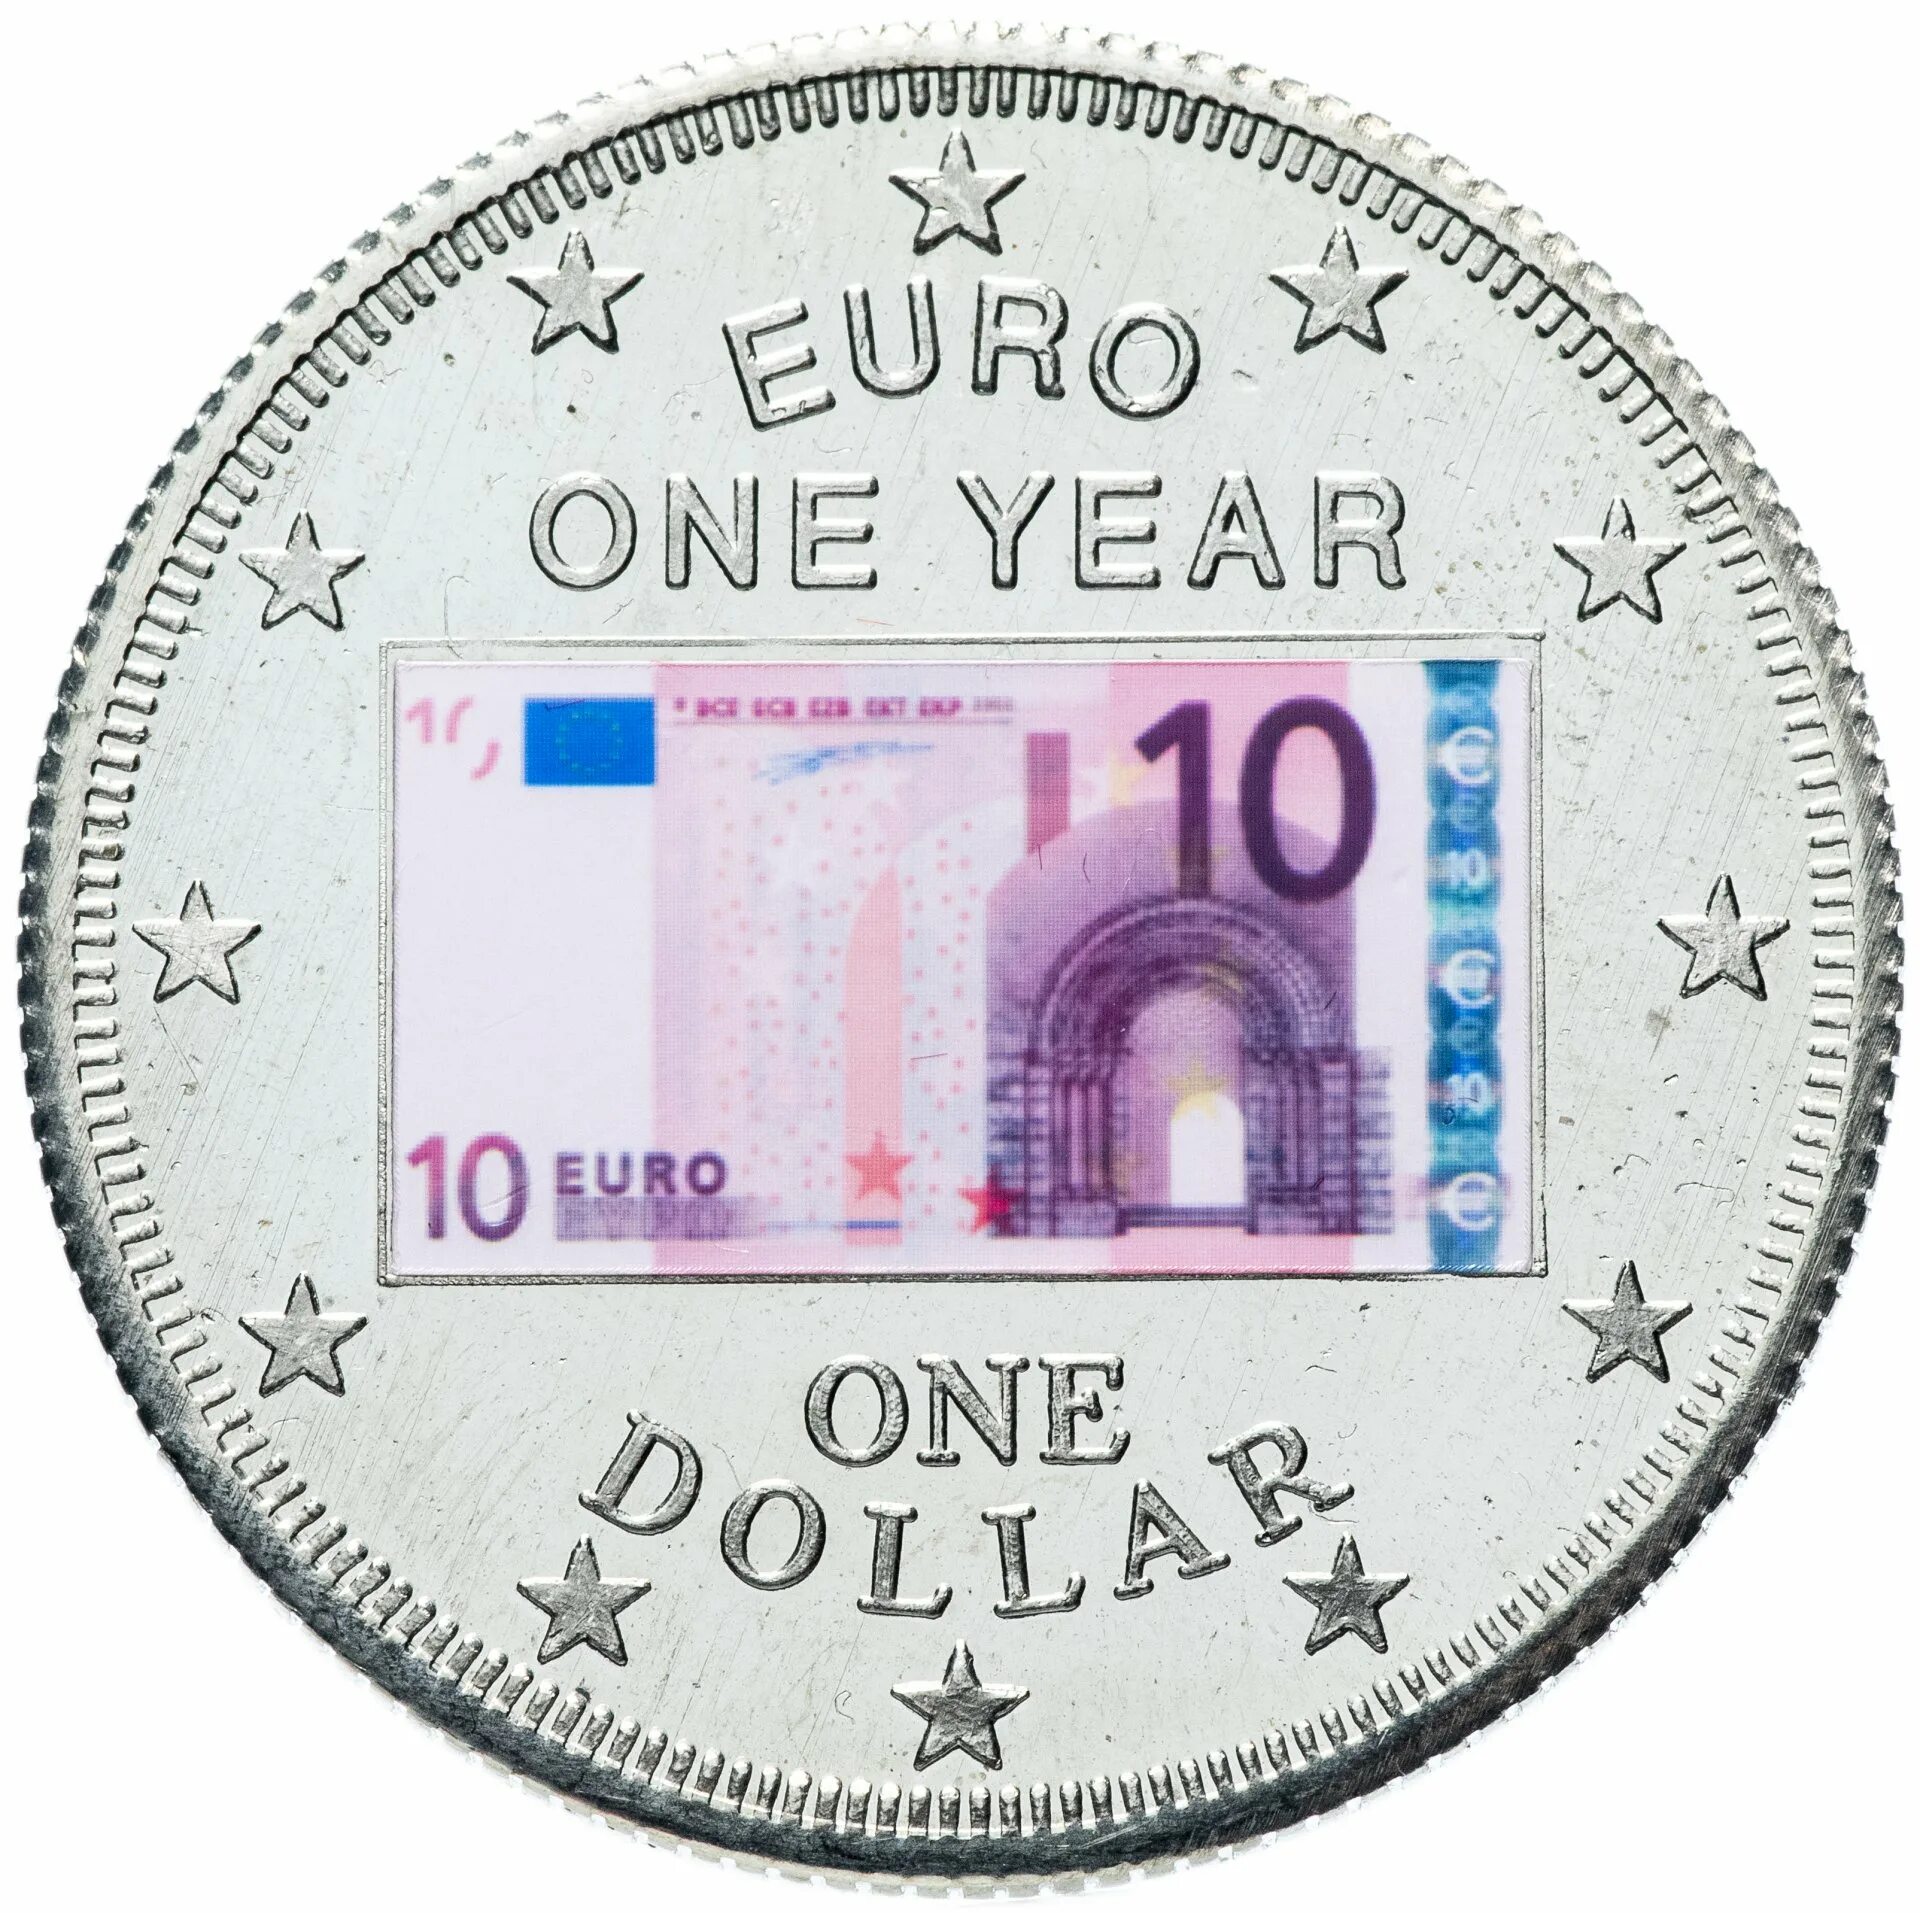 1 Доллар острова Кука 2003. Острова Кука валюта. Монеты острова Кука 1 доллар, 2003-10. Доллар 2003 года.